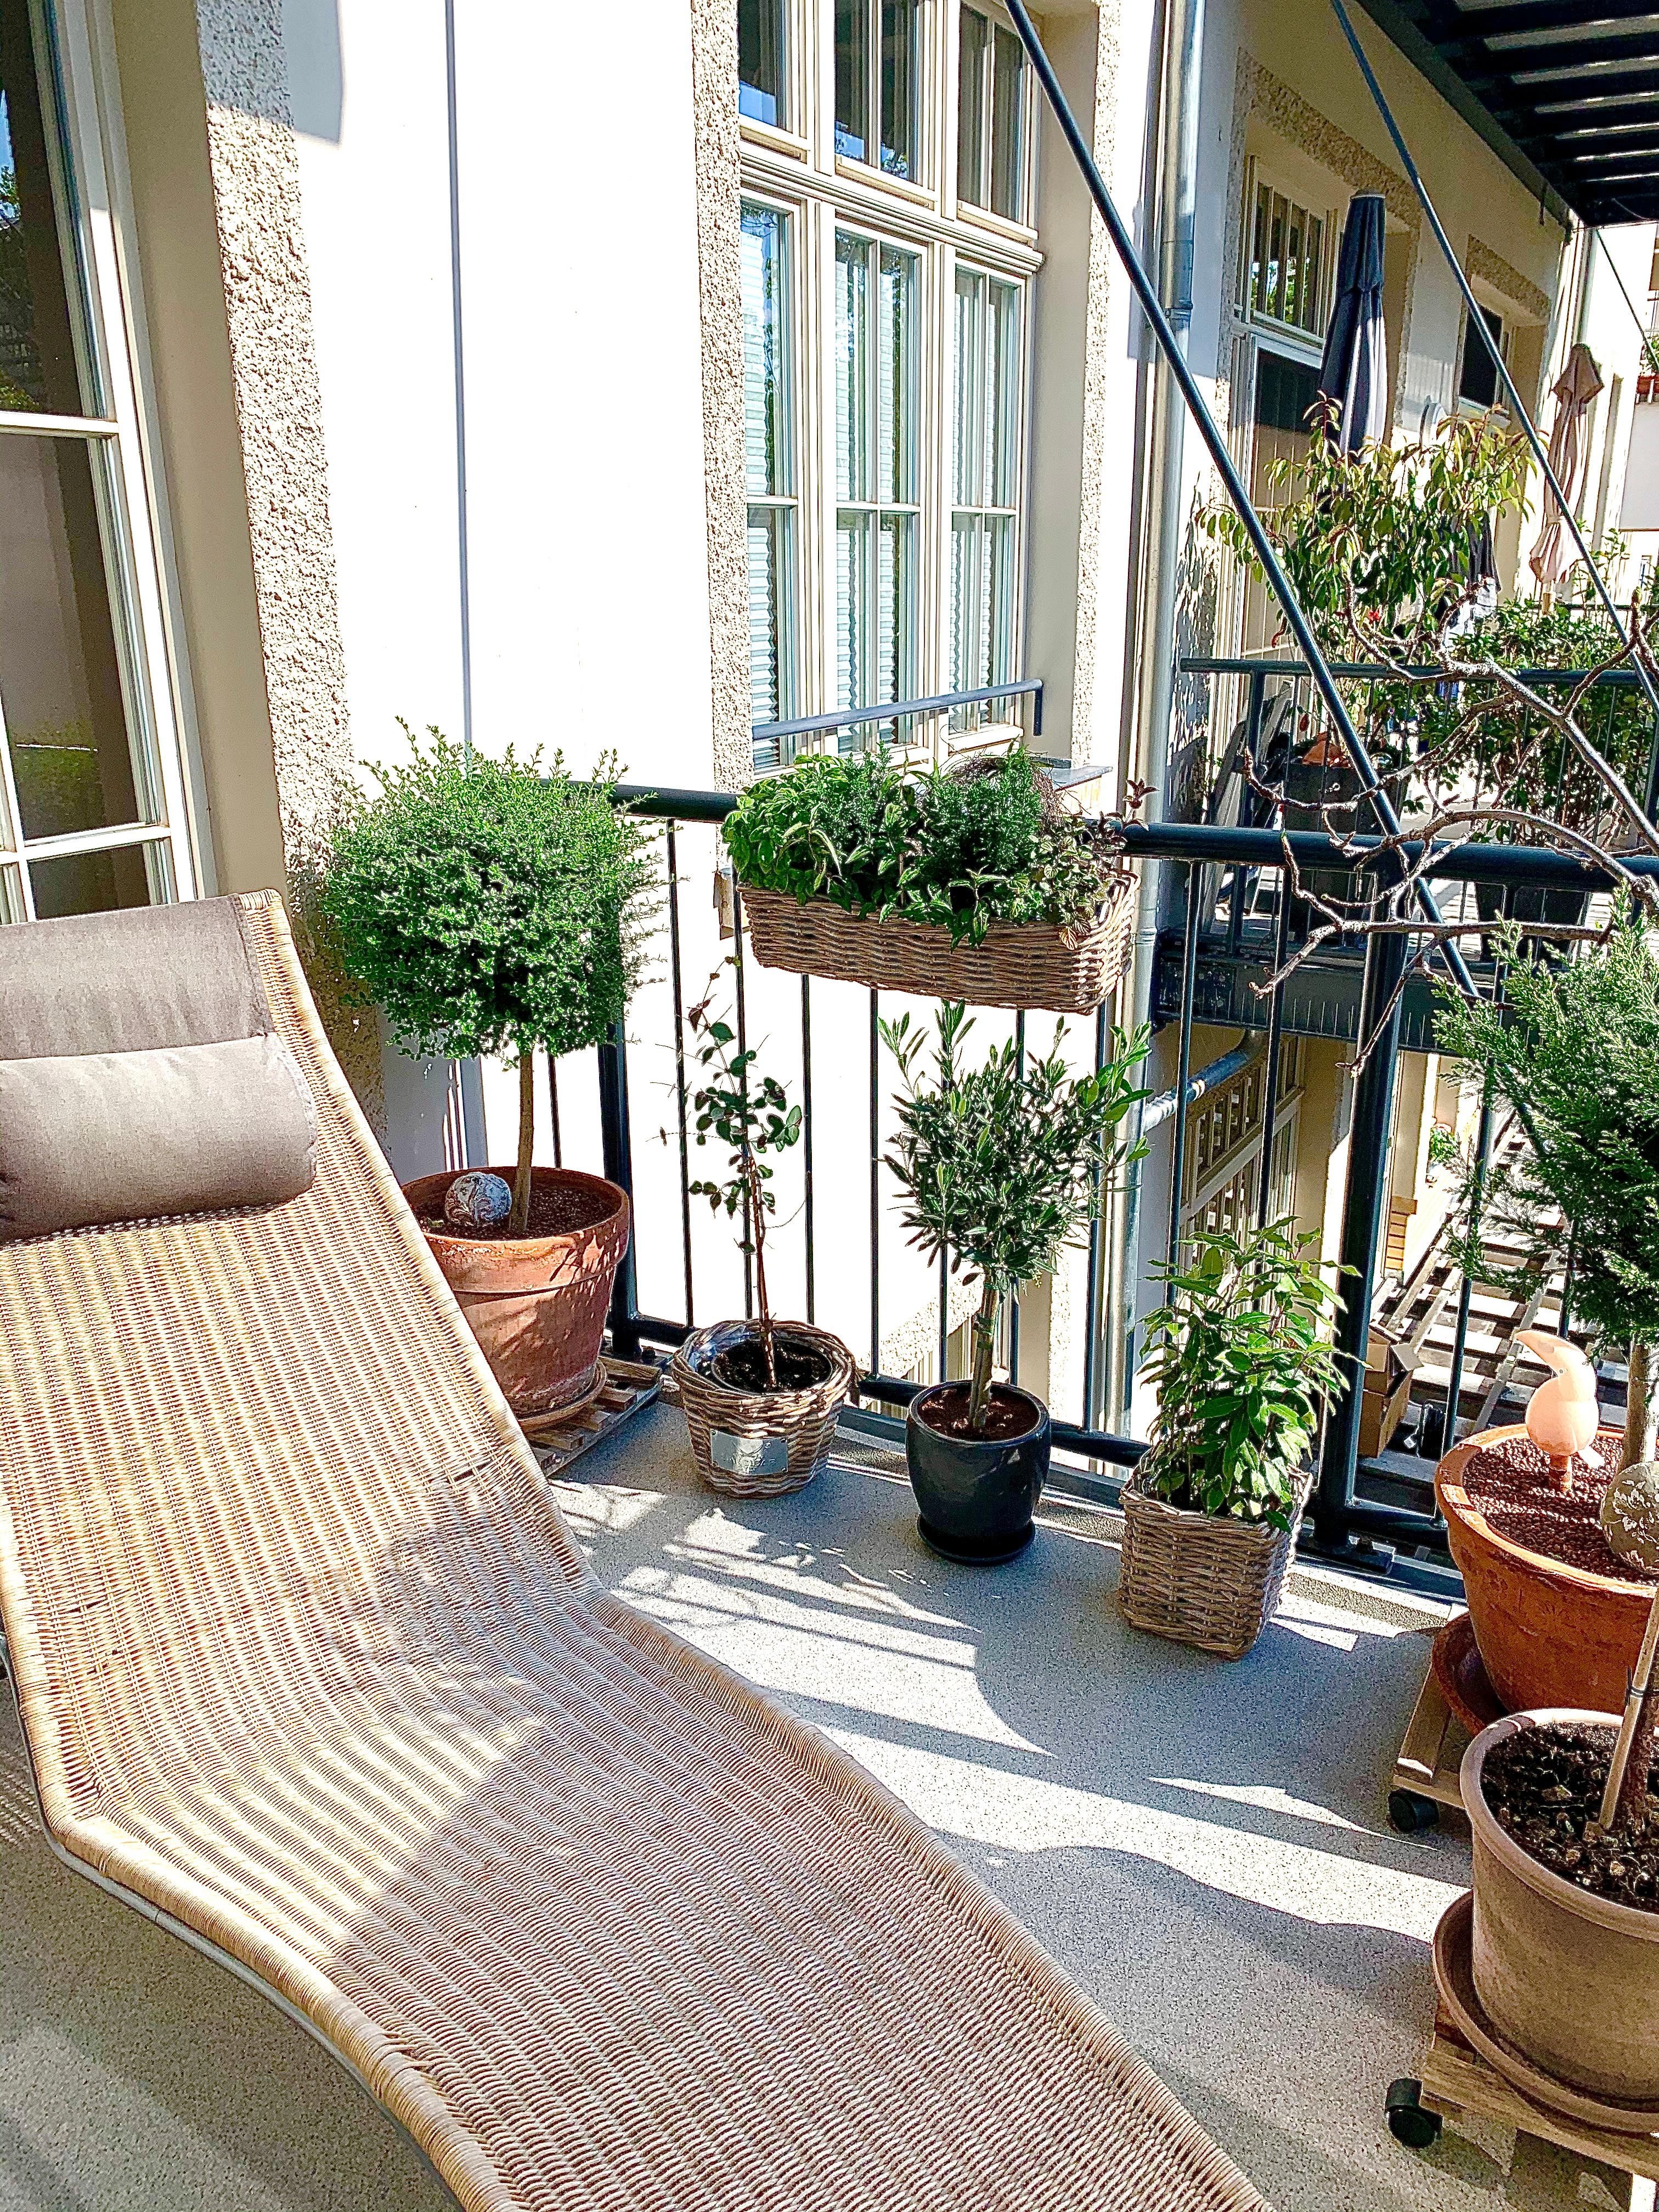 Mein Platz an der Sonne
#balkon #liege #ikea